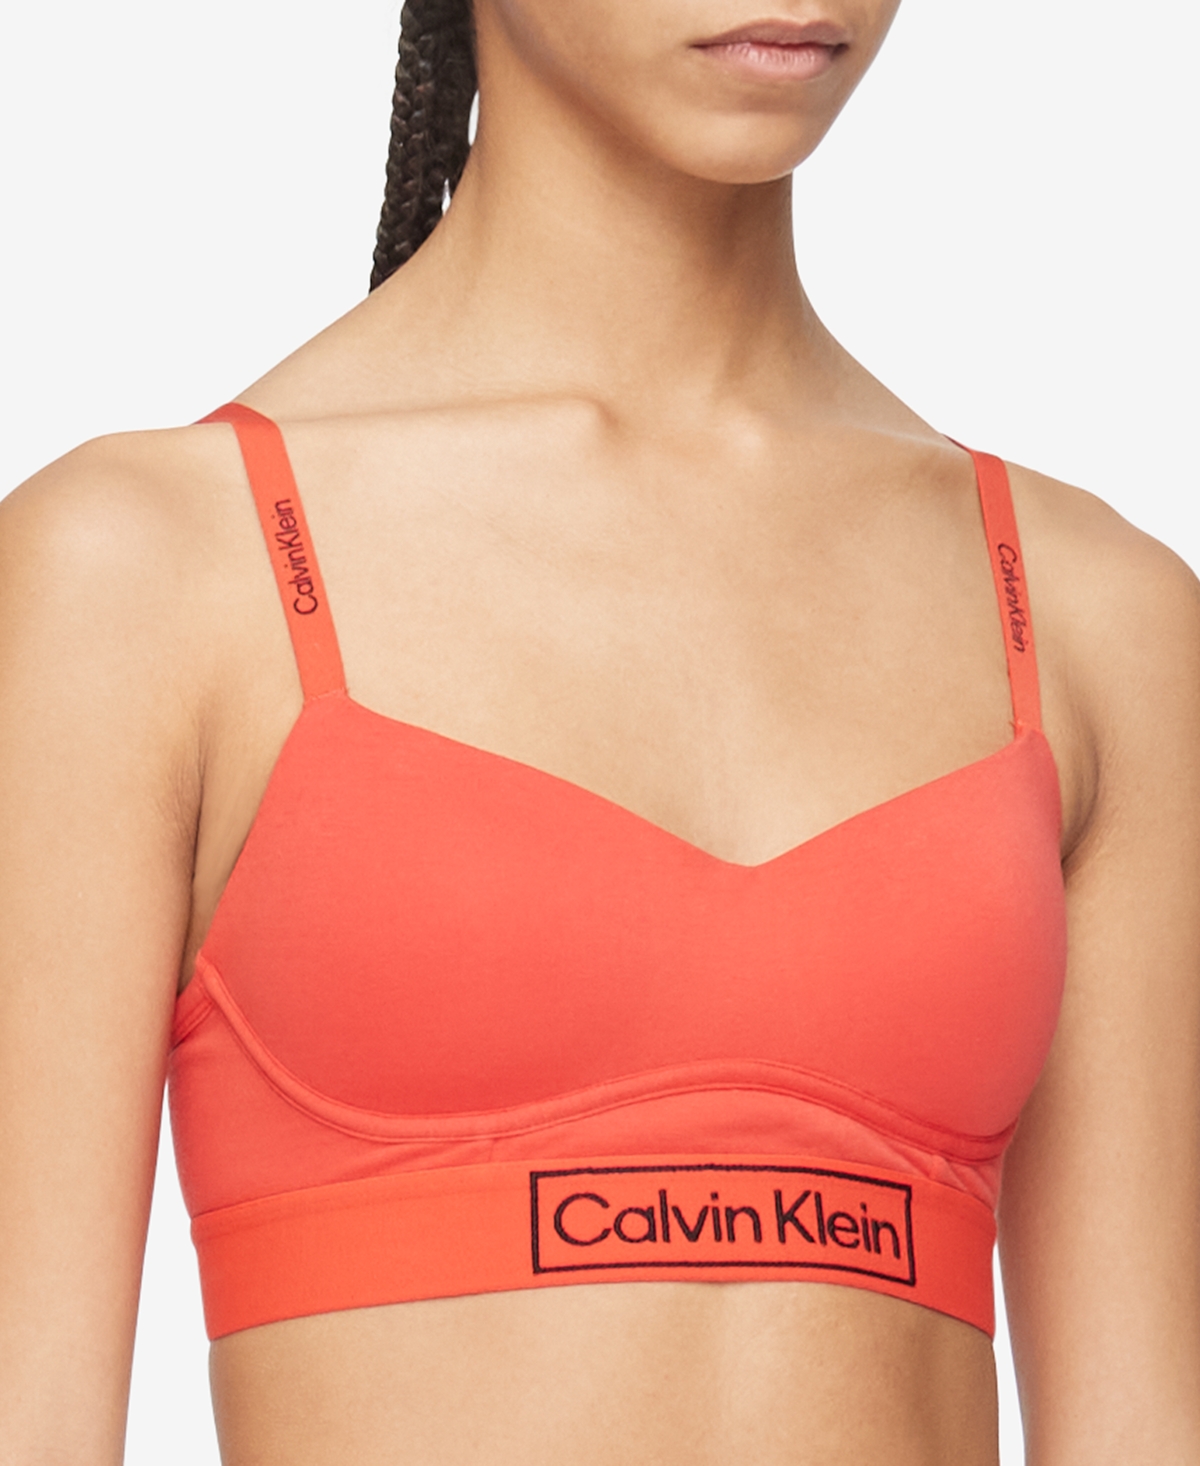 Calvin Klein Women's Reimagined Heritage Light Lined Bralette QF6770